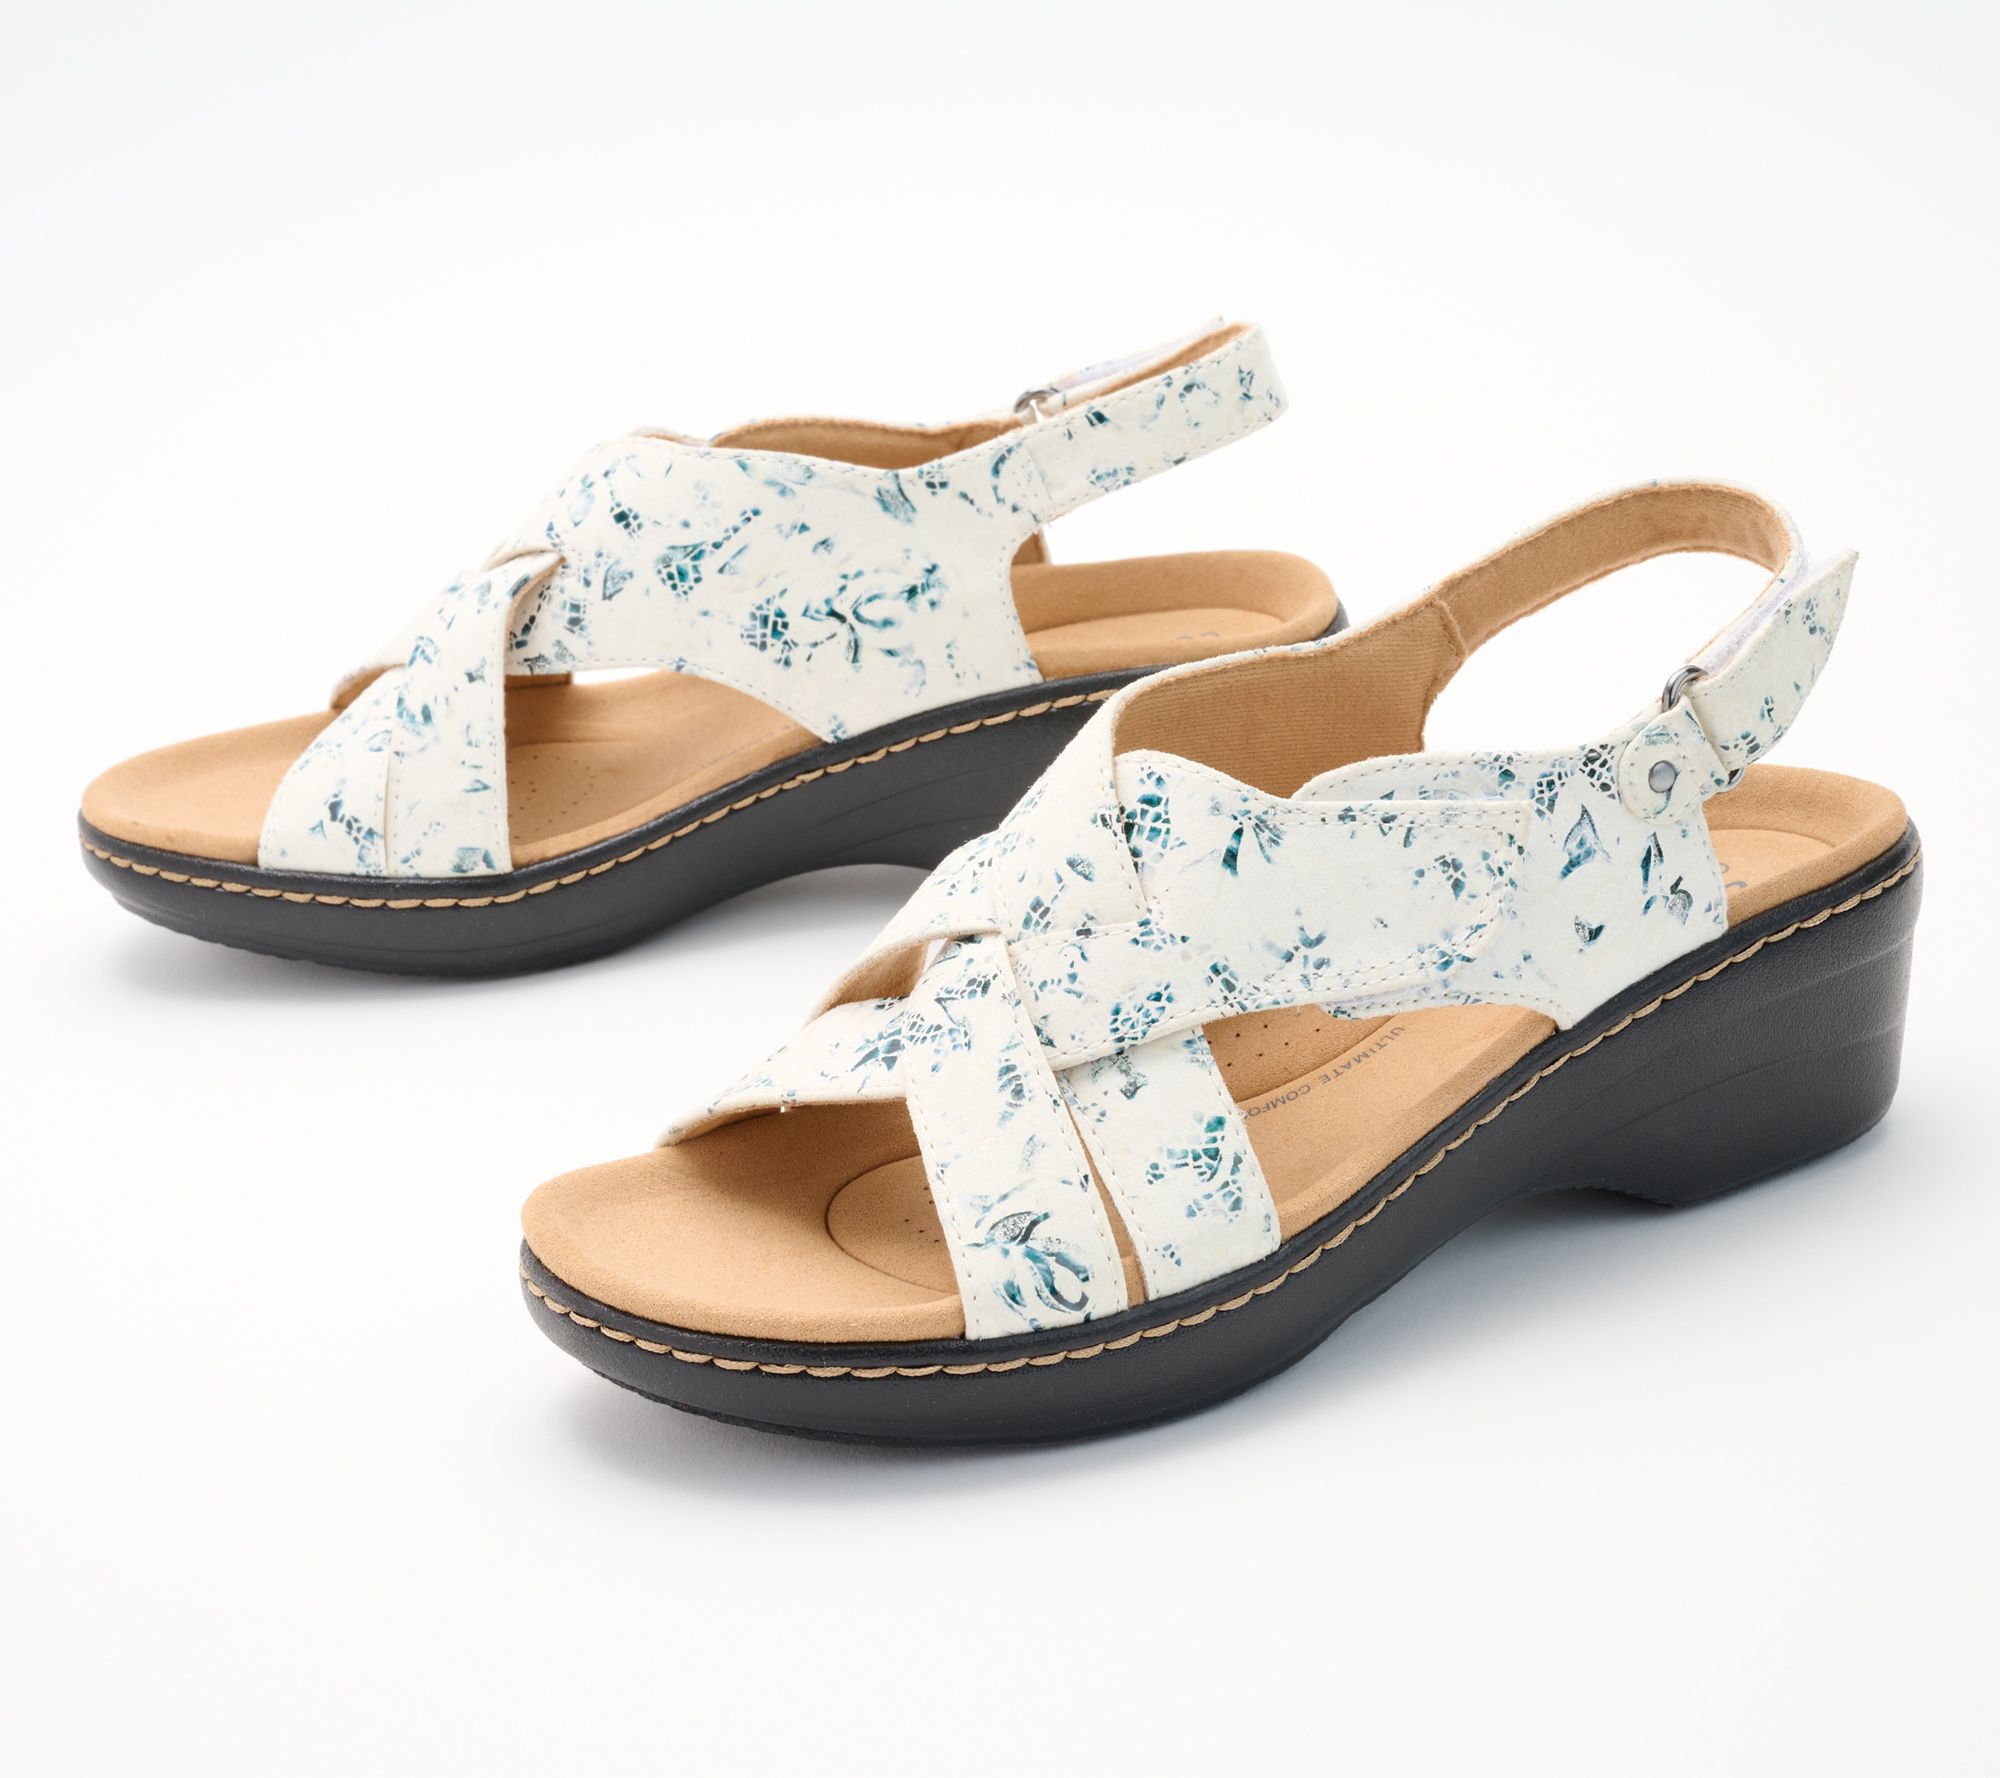 Clarks Collection Sandals - Merliah Echo - QVC.com